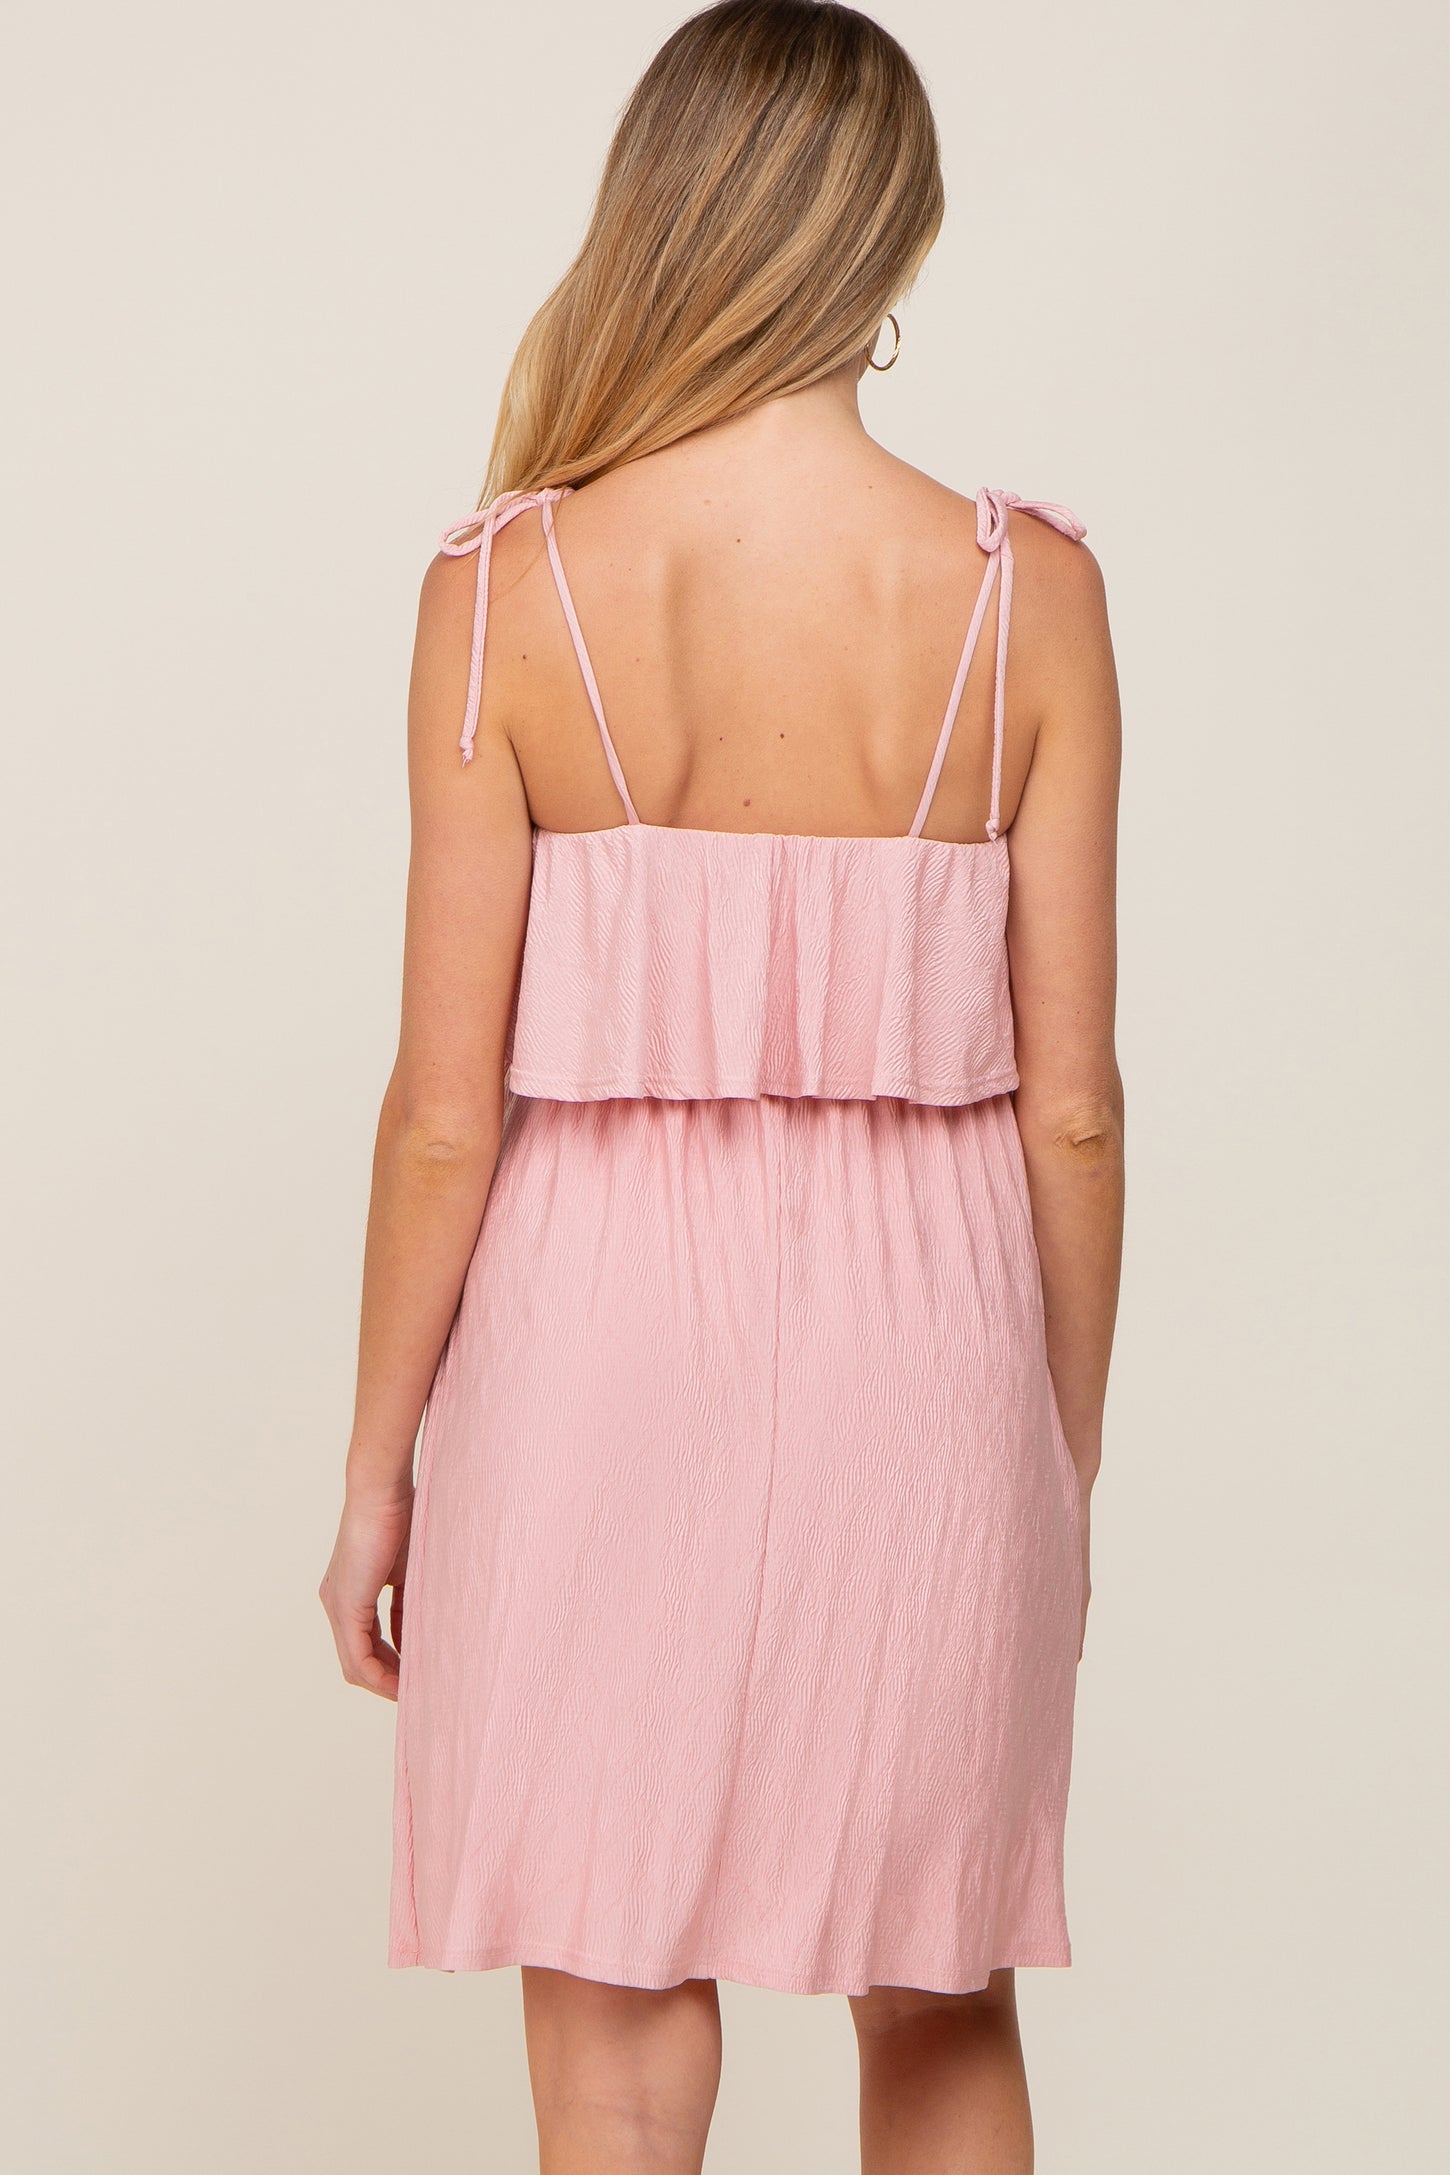 Light Pink Ruffle Overlay Shoulder Tie Maternity Dress